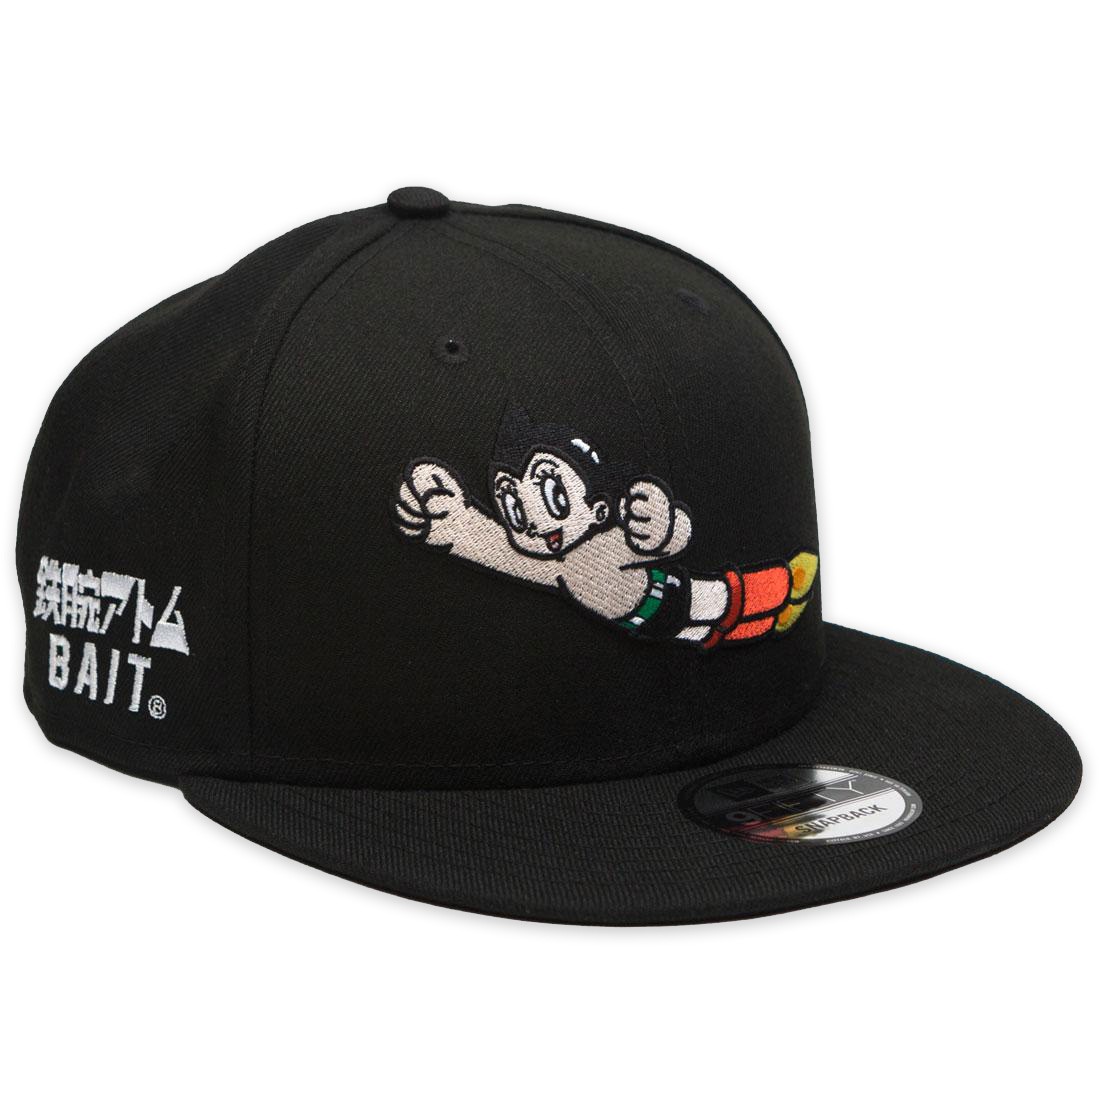 BAIT x Astro Boy x New Era Launch Snapback Cap (black)